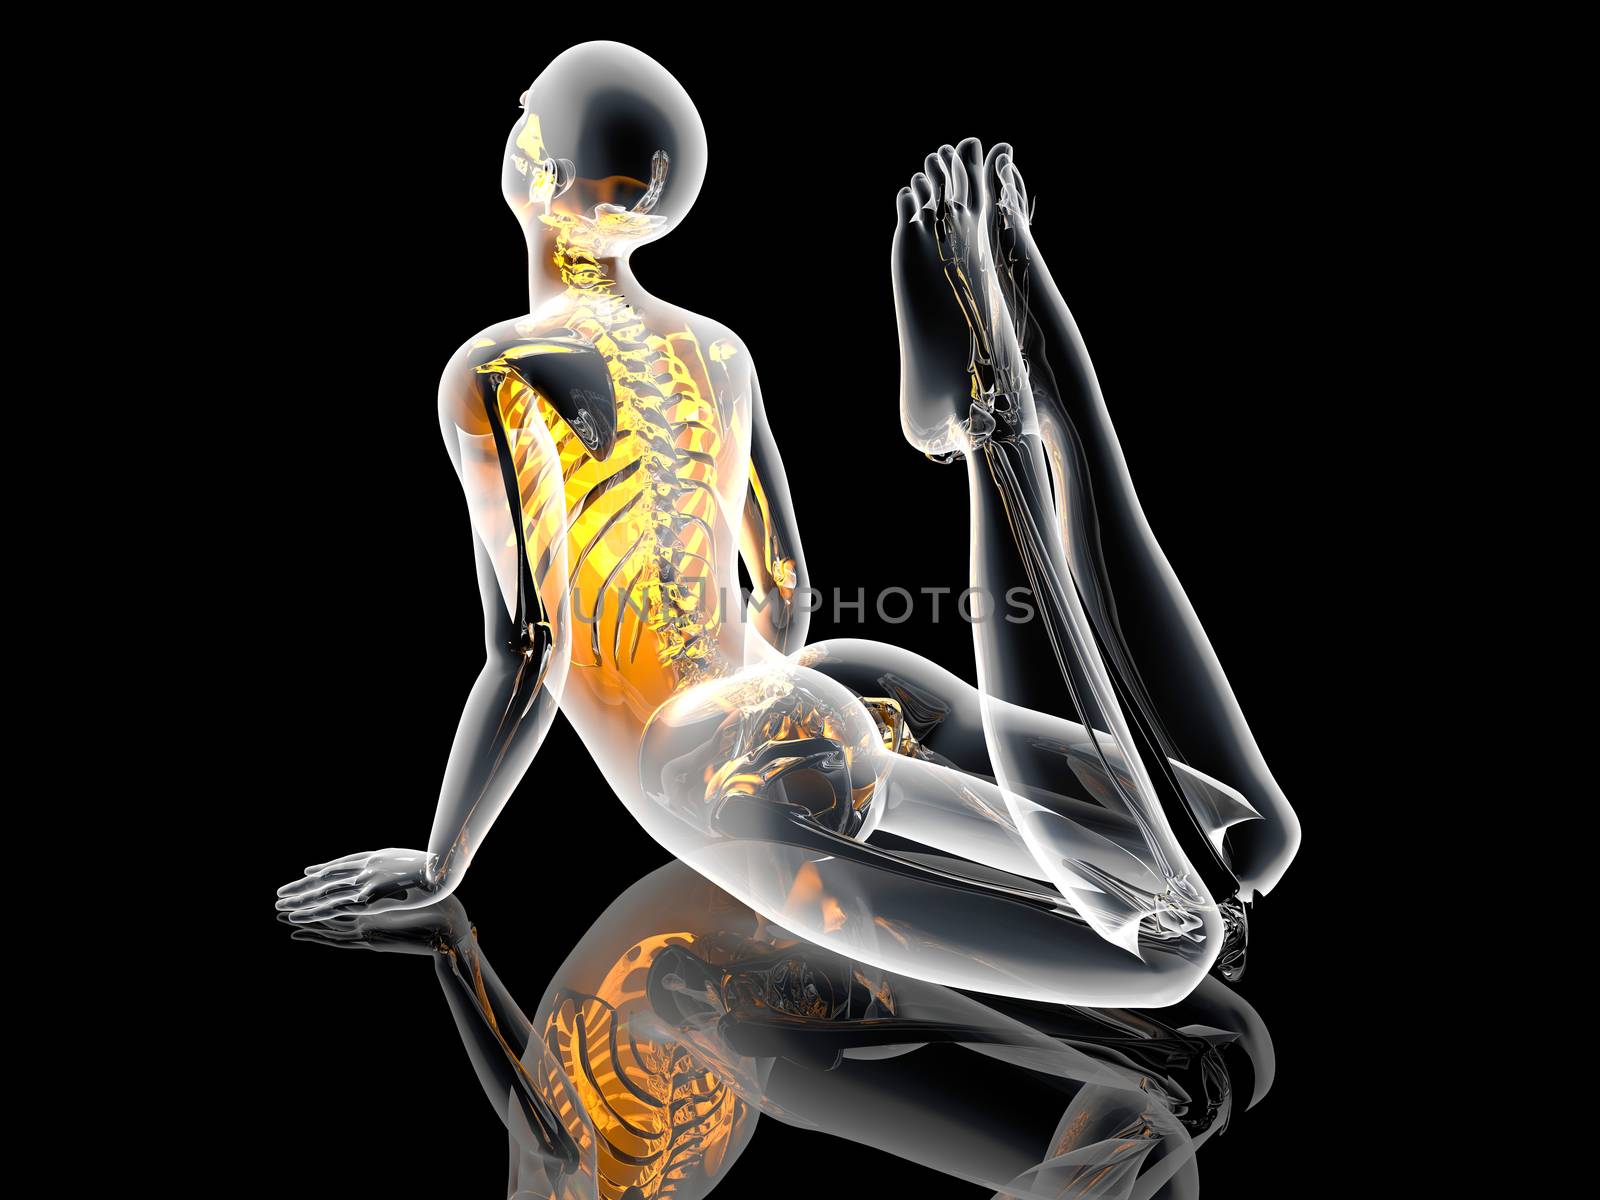 A lookalike of the King Cobra Yoga pose. 3D illustration.